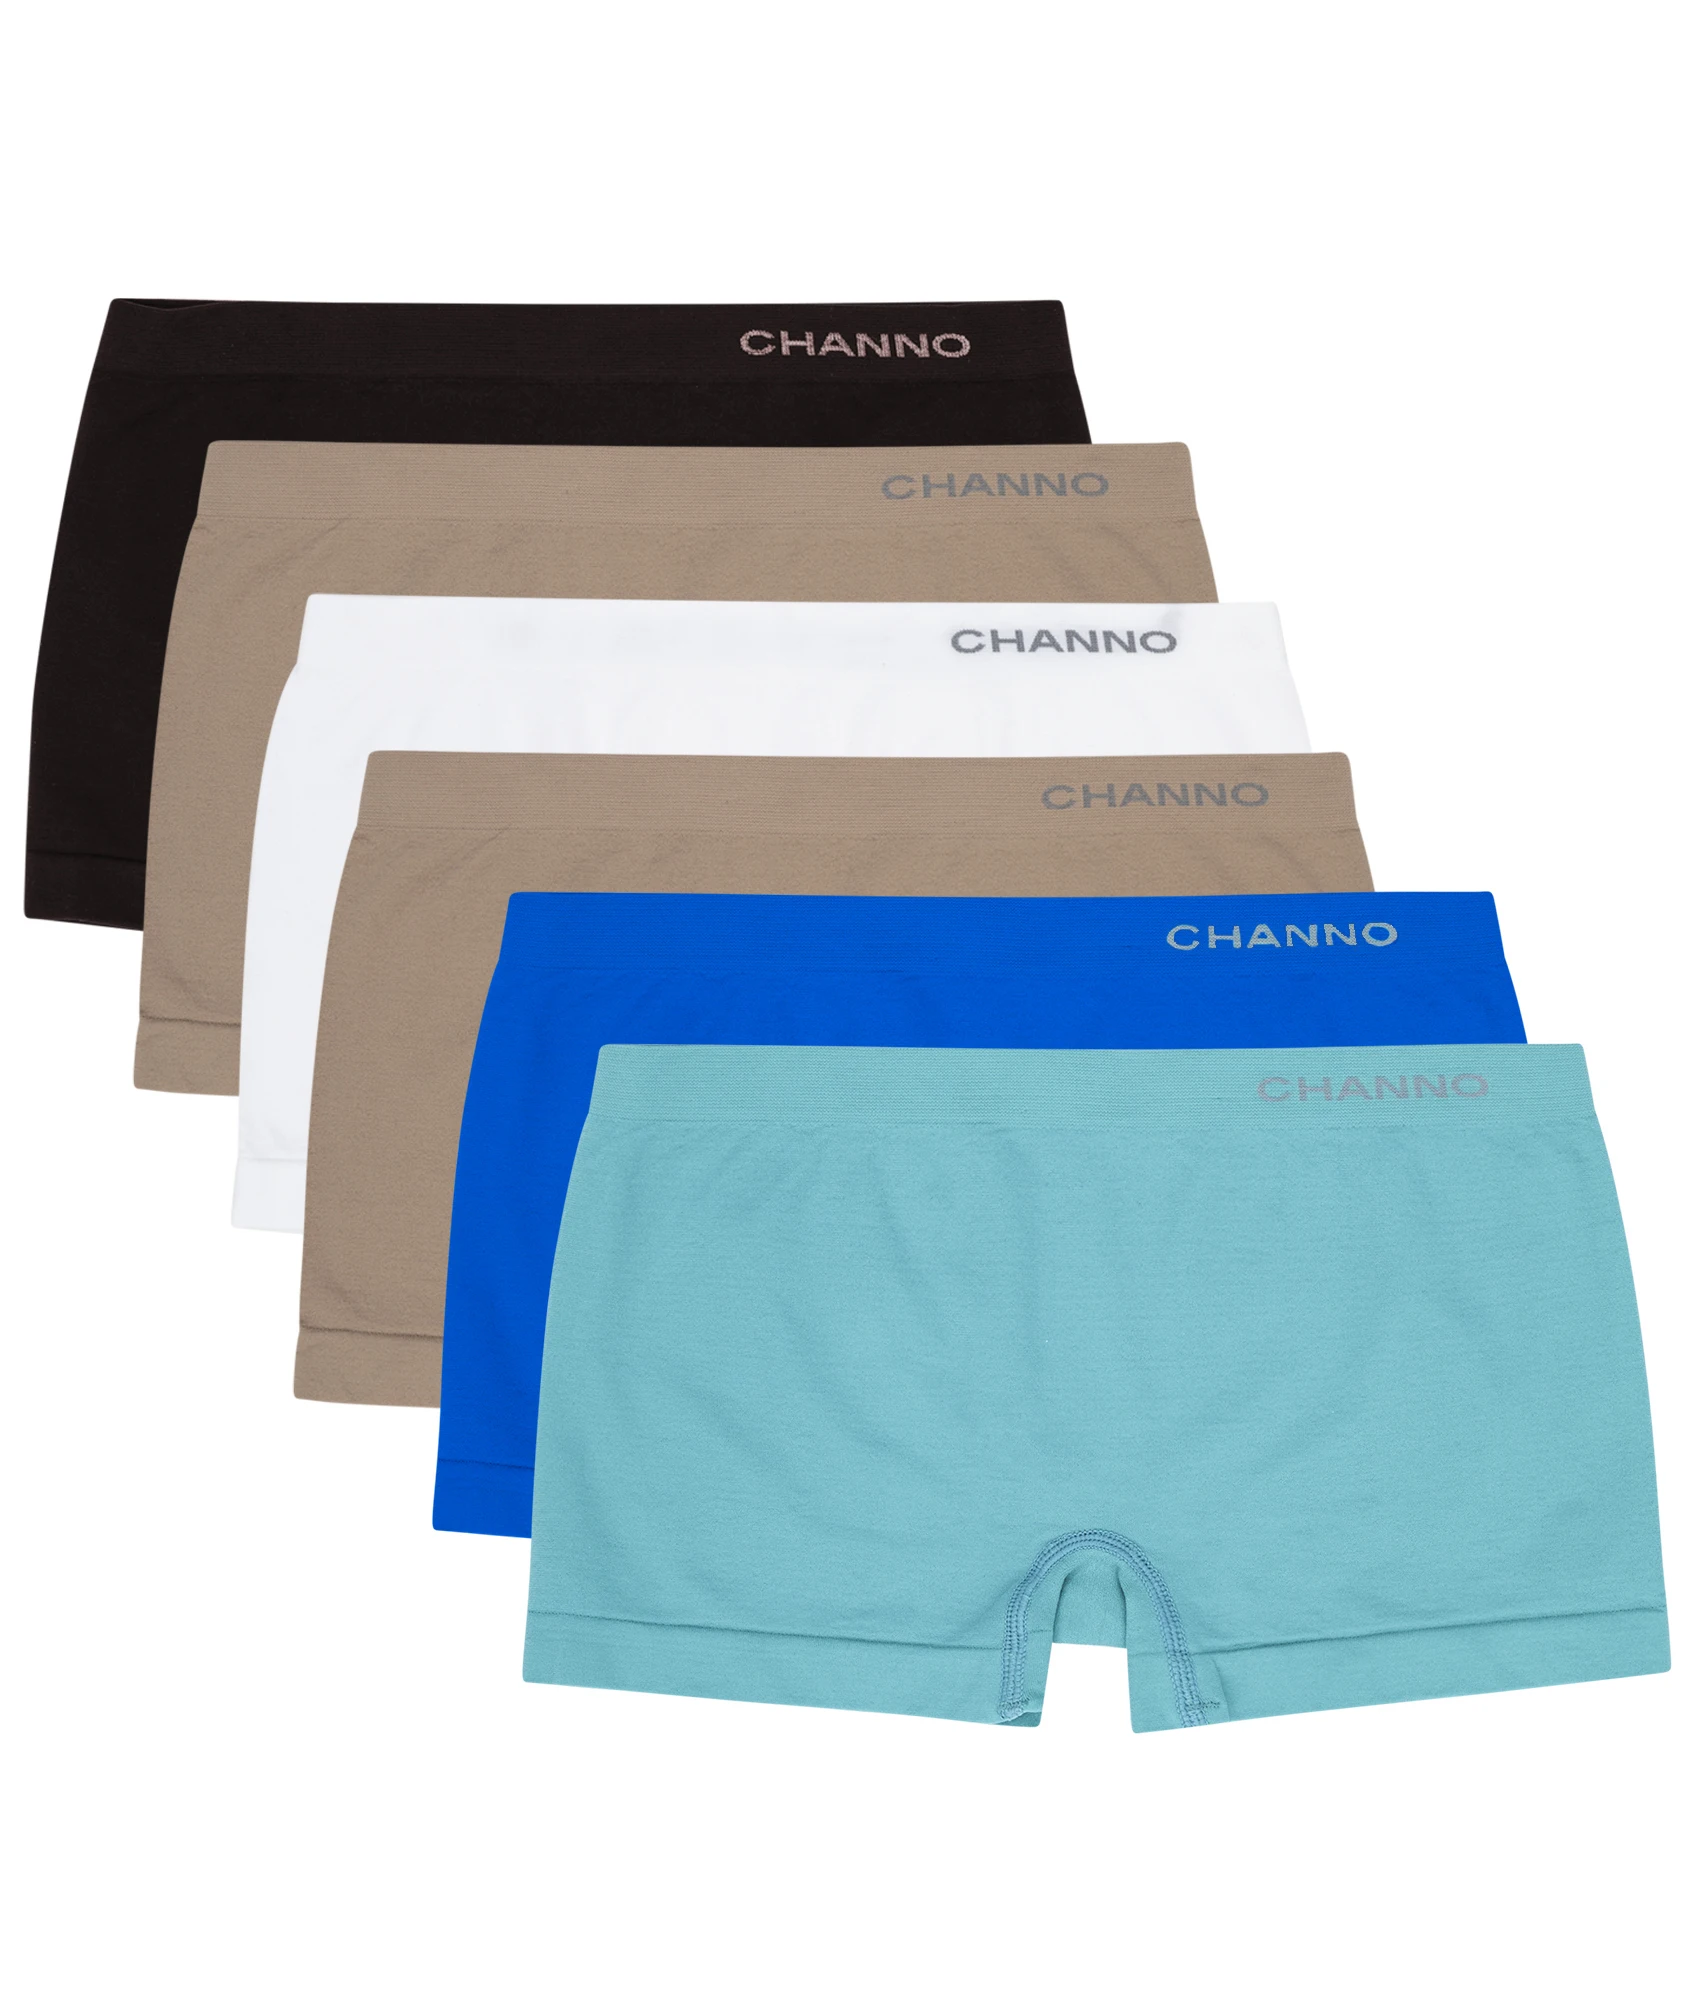 Channo Panties Culotte Shorts Lycra Seamless Soft 1 Piece Random Shipping Panties - AliExpress